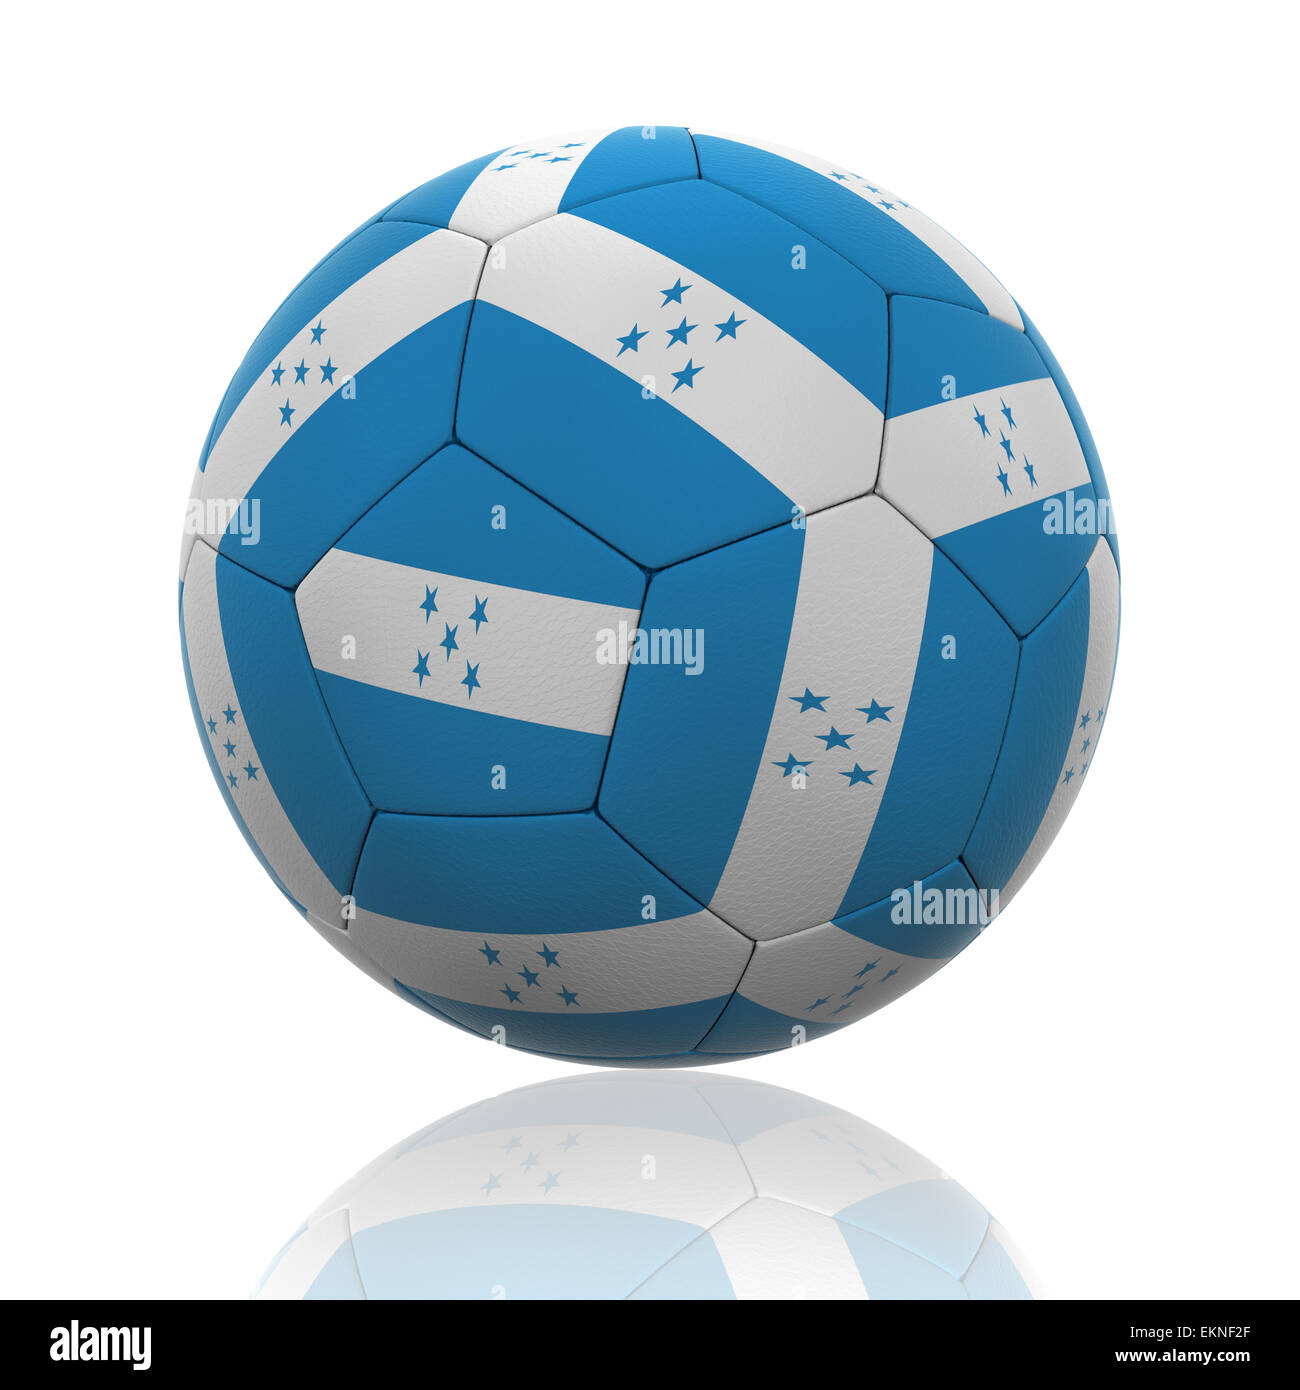 Soccer ball DRIBBLING New Exclusive Designs HONDURAS Size 5 